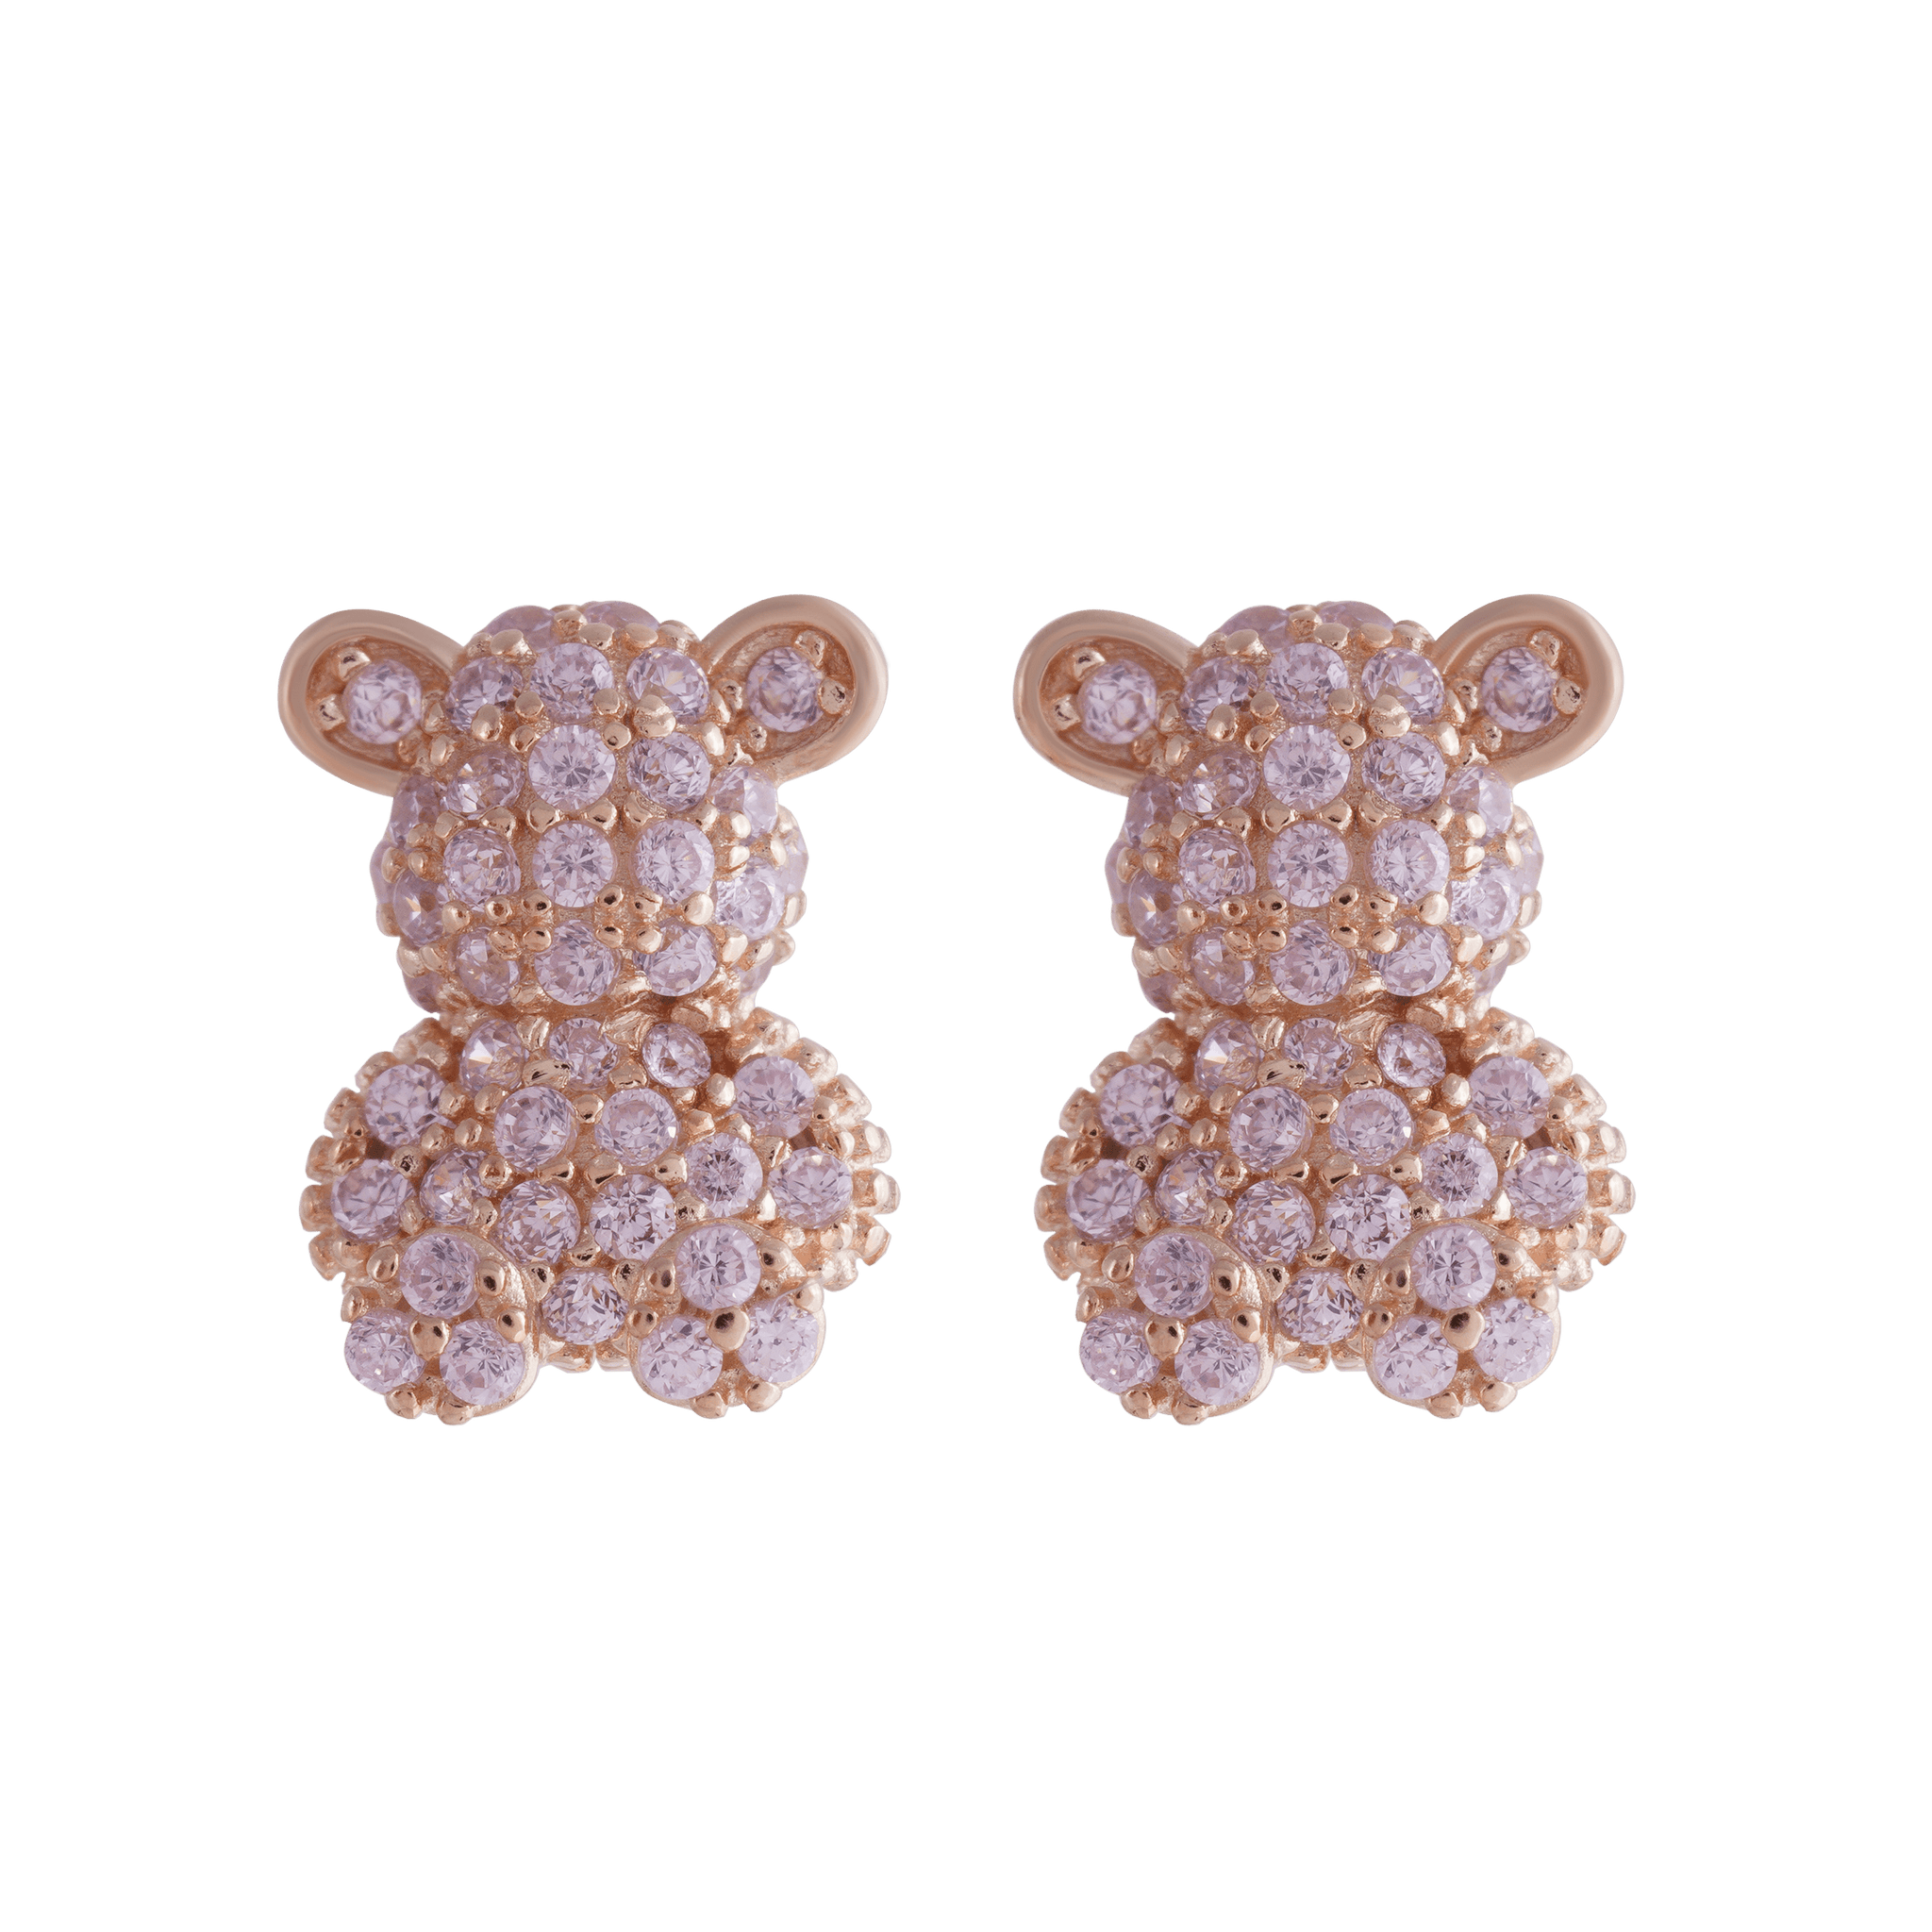 'Loot At Me' Tiny Teddy Bear Pink Earrings For Women In 925 Silver - YANA SILVER